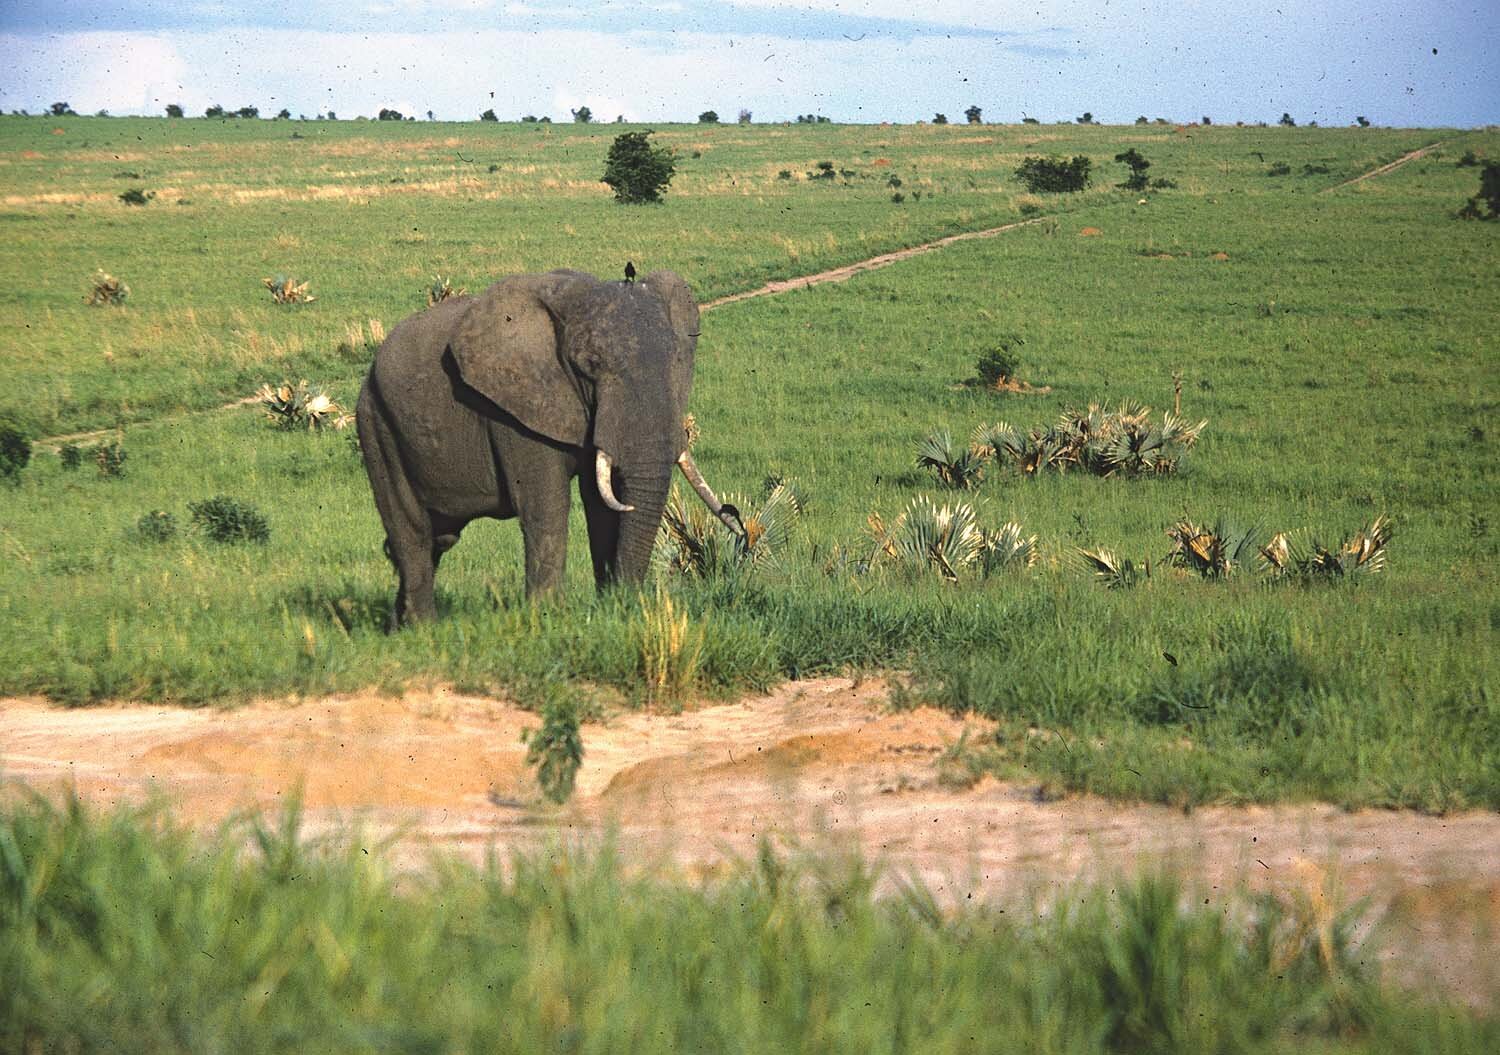 Metz 10 - 1959 - Elephant in plain - Metz84 - 8 M.jpg